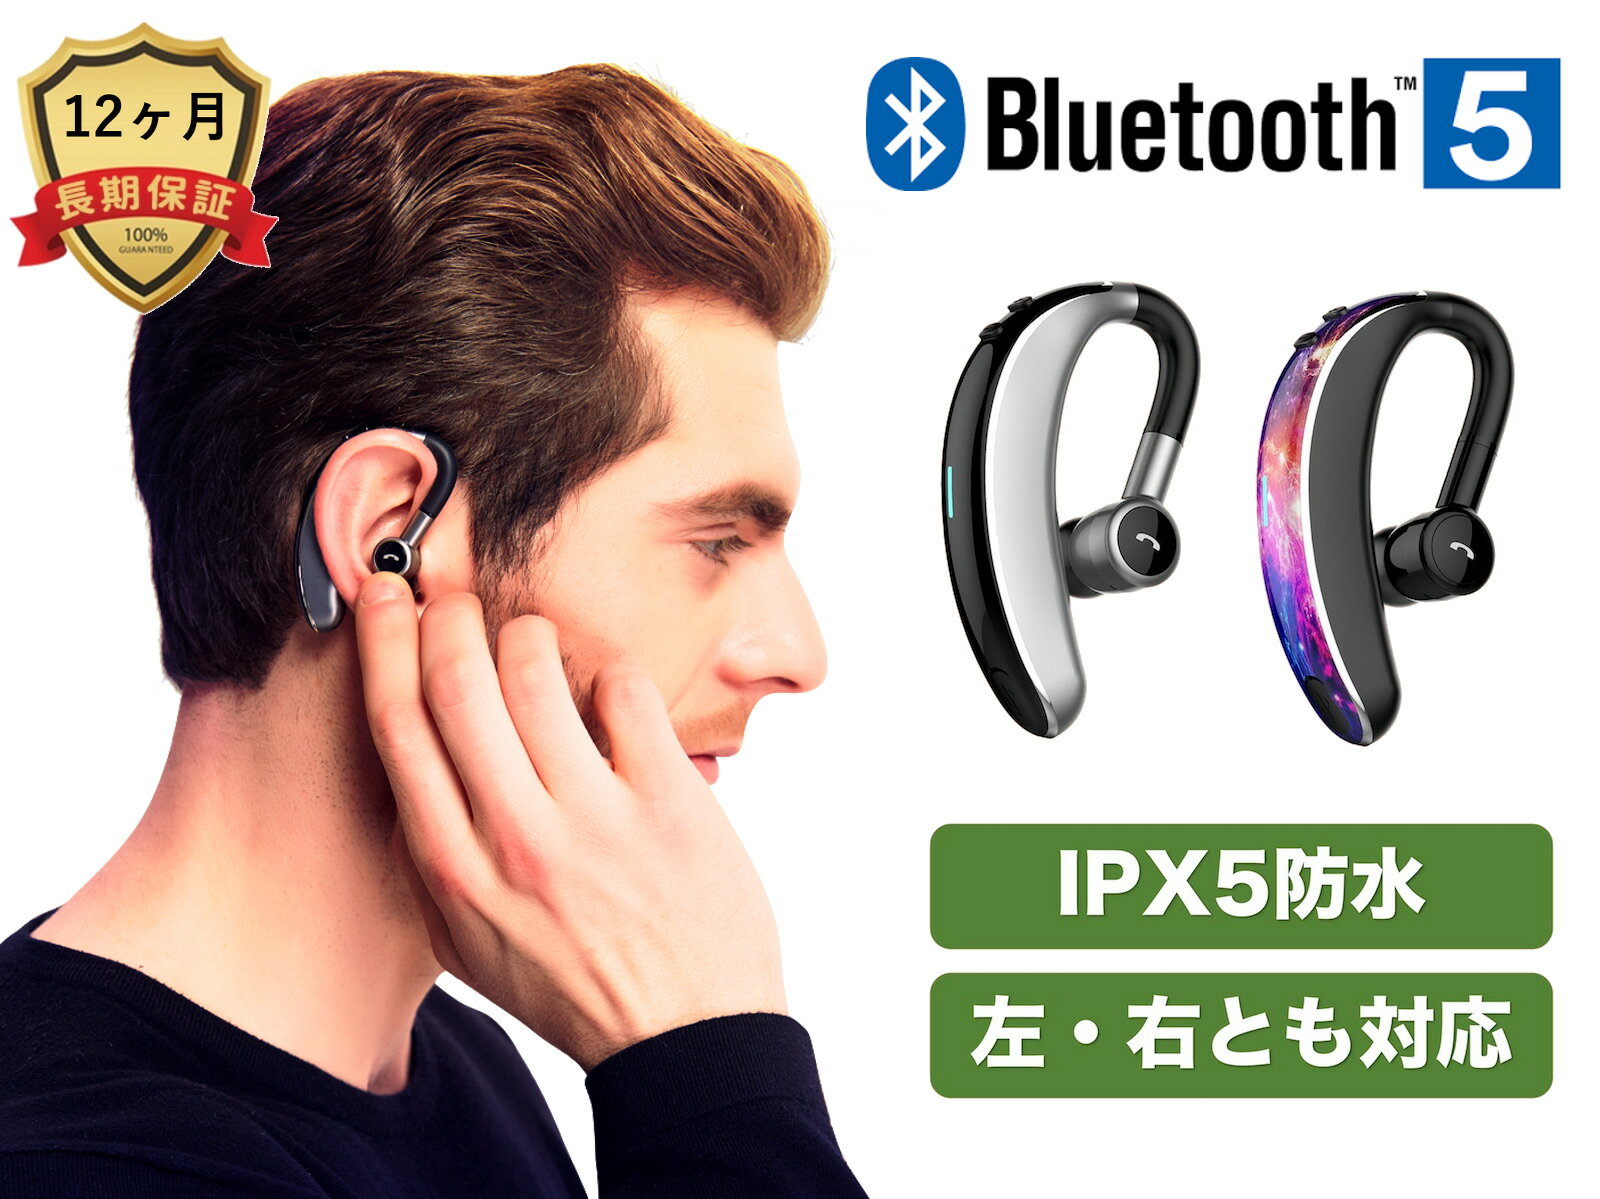 【Bluetooth 5.0】IPX5防水 ワイヤレスイヤホ